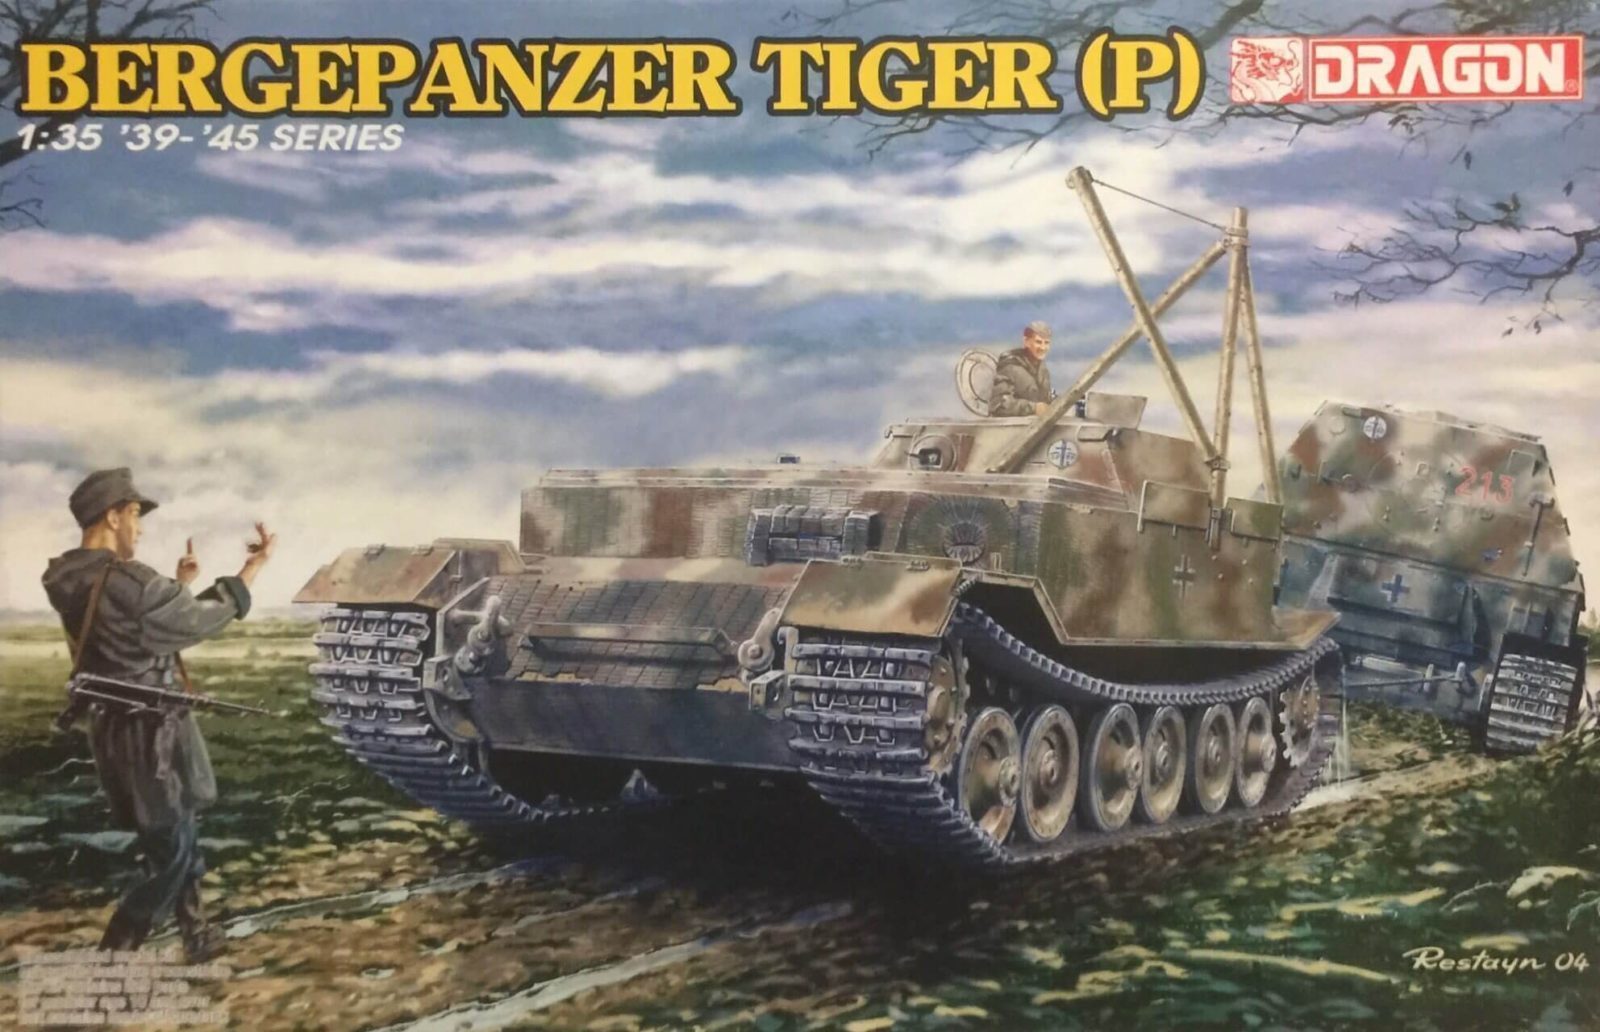 Dragon Bergepanzer Tiger (P) Ref 6226 Escala 1:35